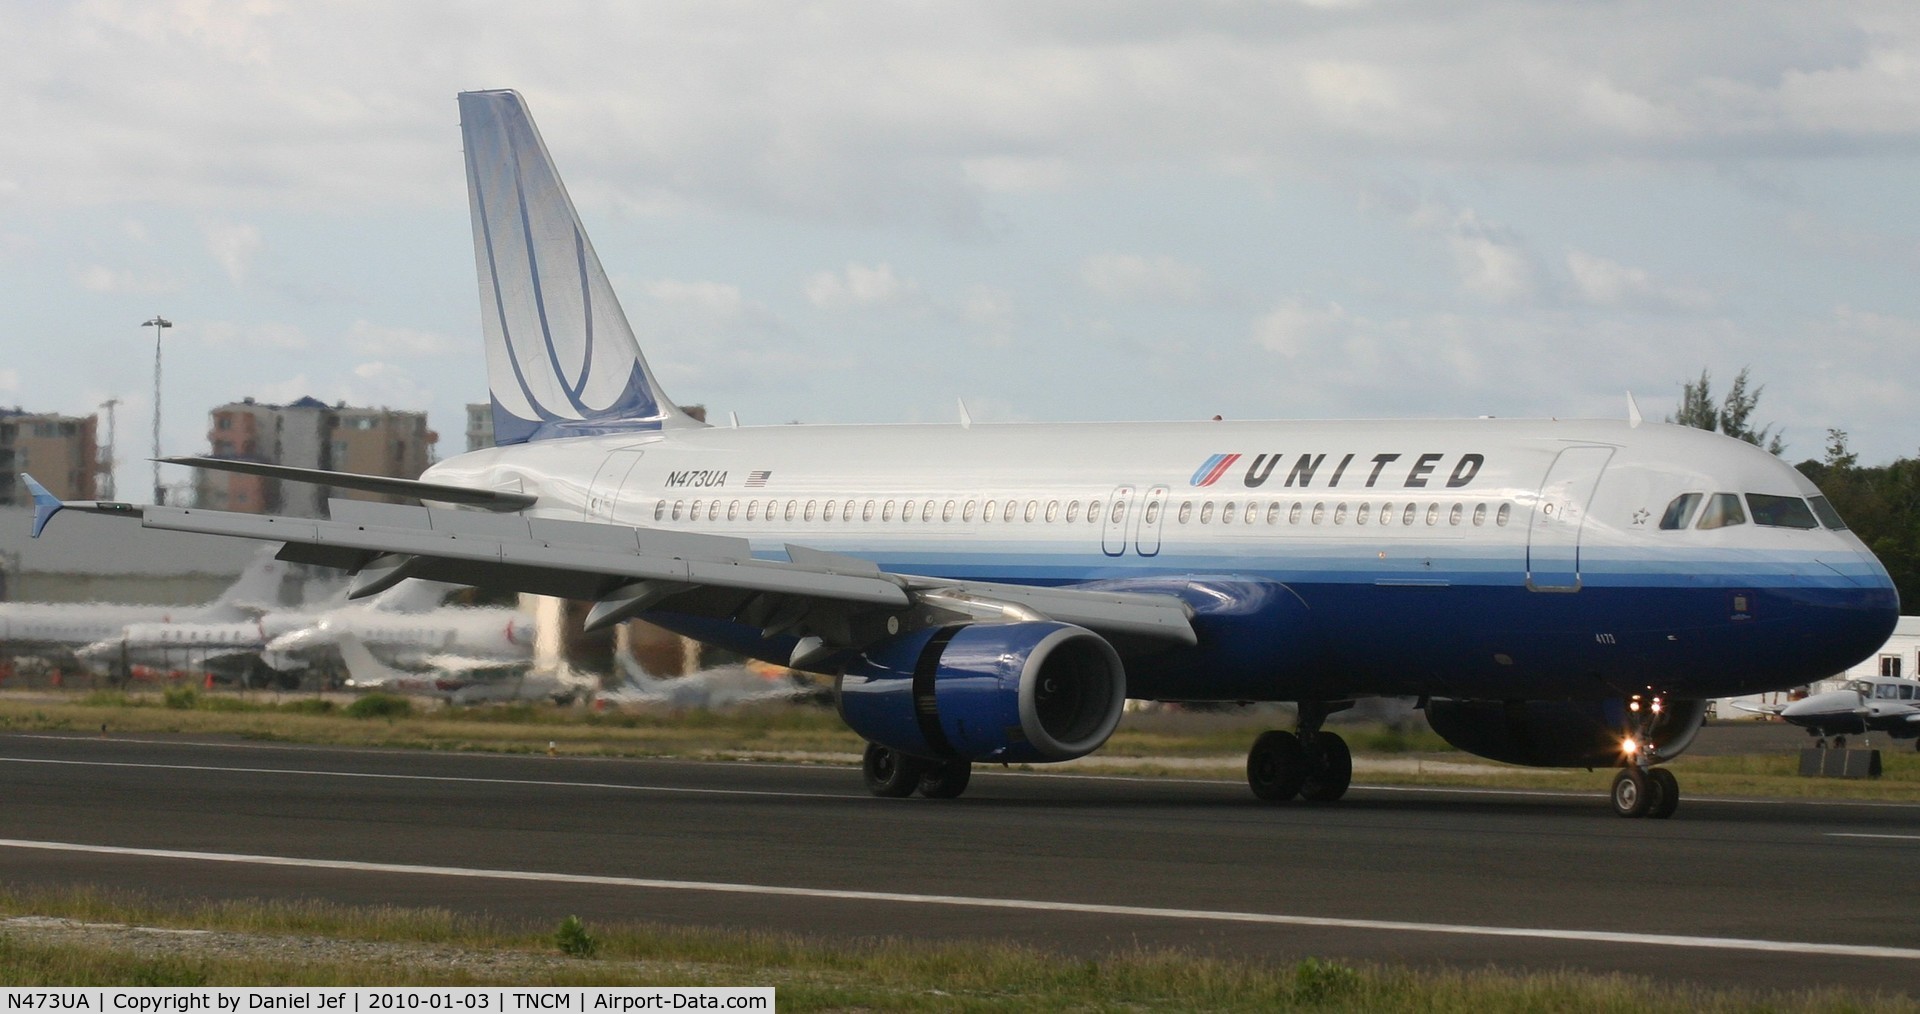 N473UA, 2001 Airbus A320-232 C/N 1469, United N473UA landed at TNCM